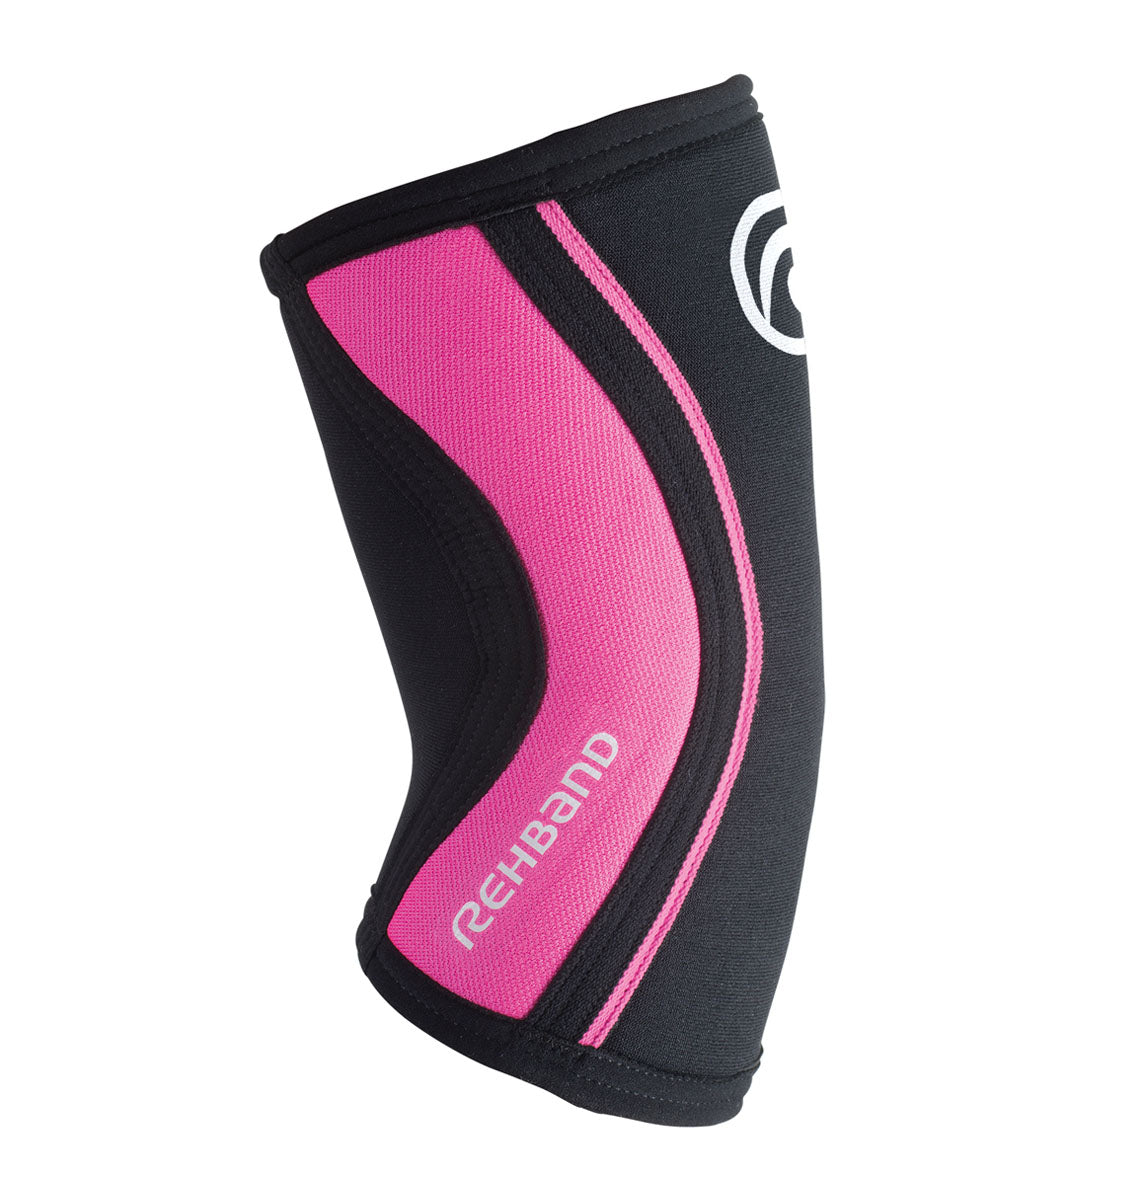 102333-020 - Rehband Rx Elbow Sleeve Black/Pink - 5mm - Side